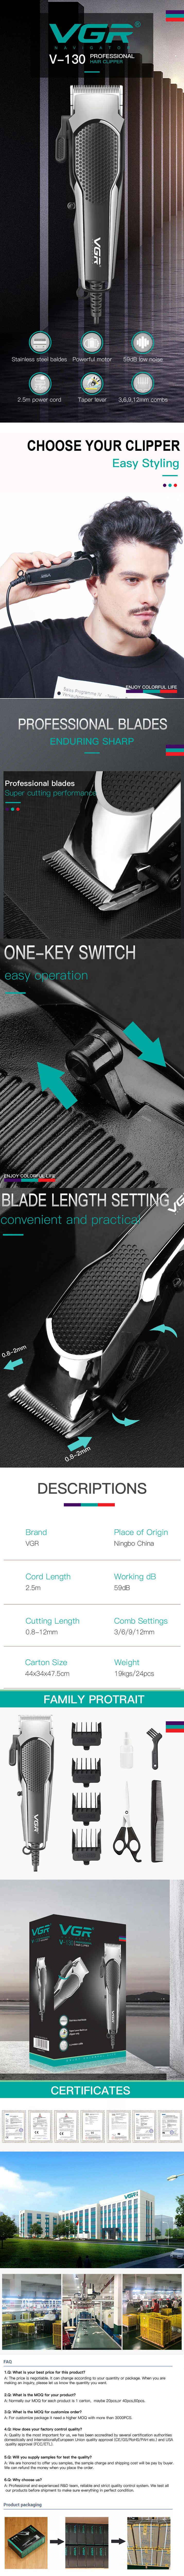 VGR V-130 Adjustment Professional Stainless Steel Blades electric Hair Clipper for Barber